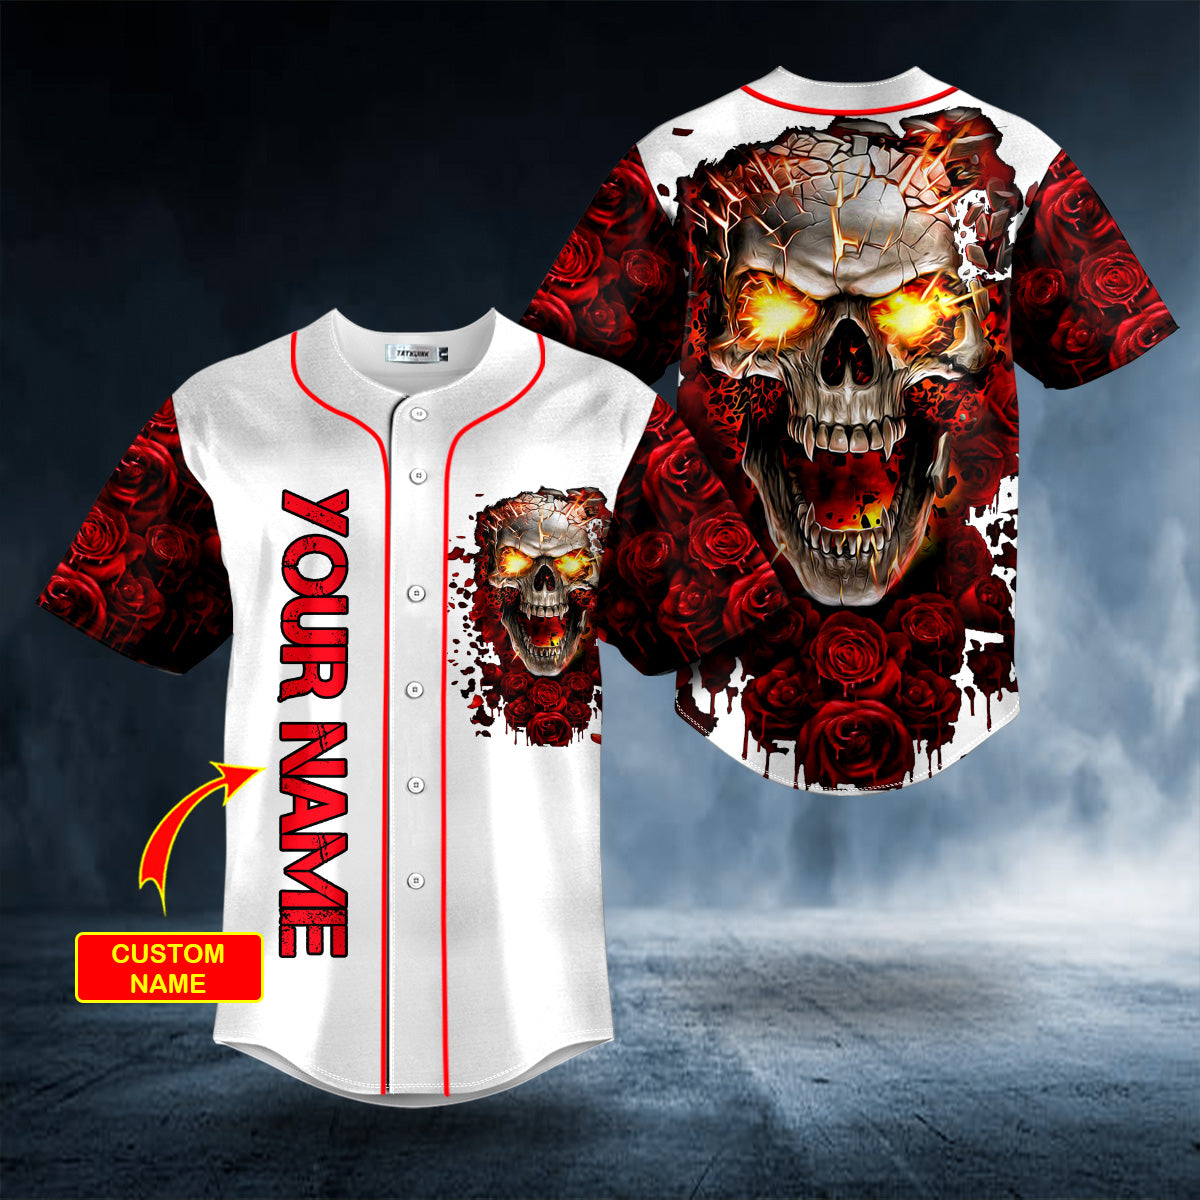 blood rose fire skull custom baseball jersey bsj 617 p4cyx